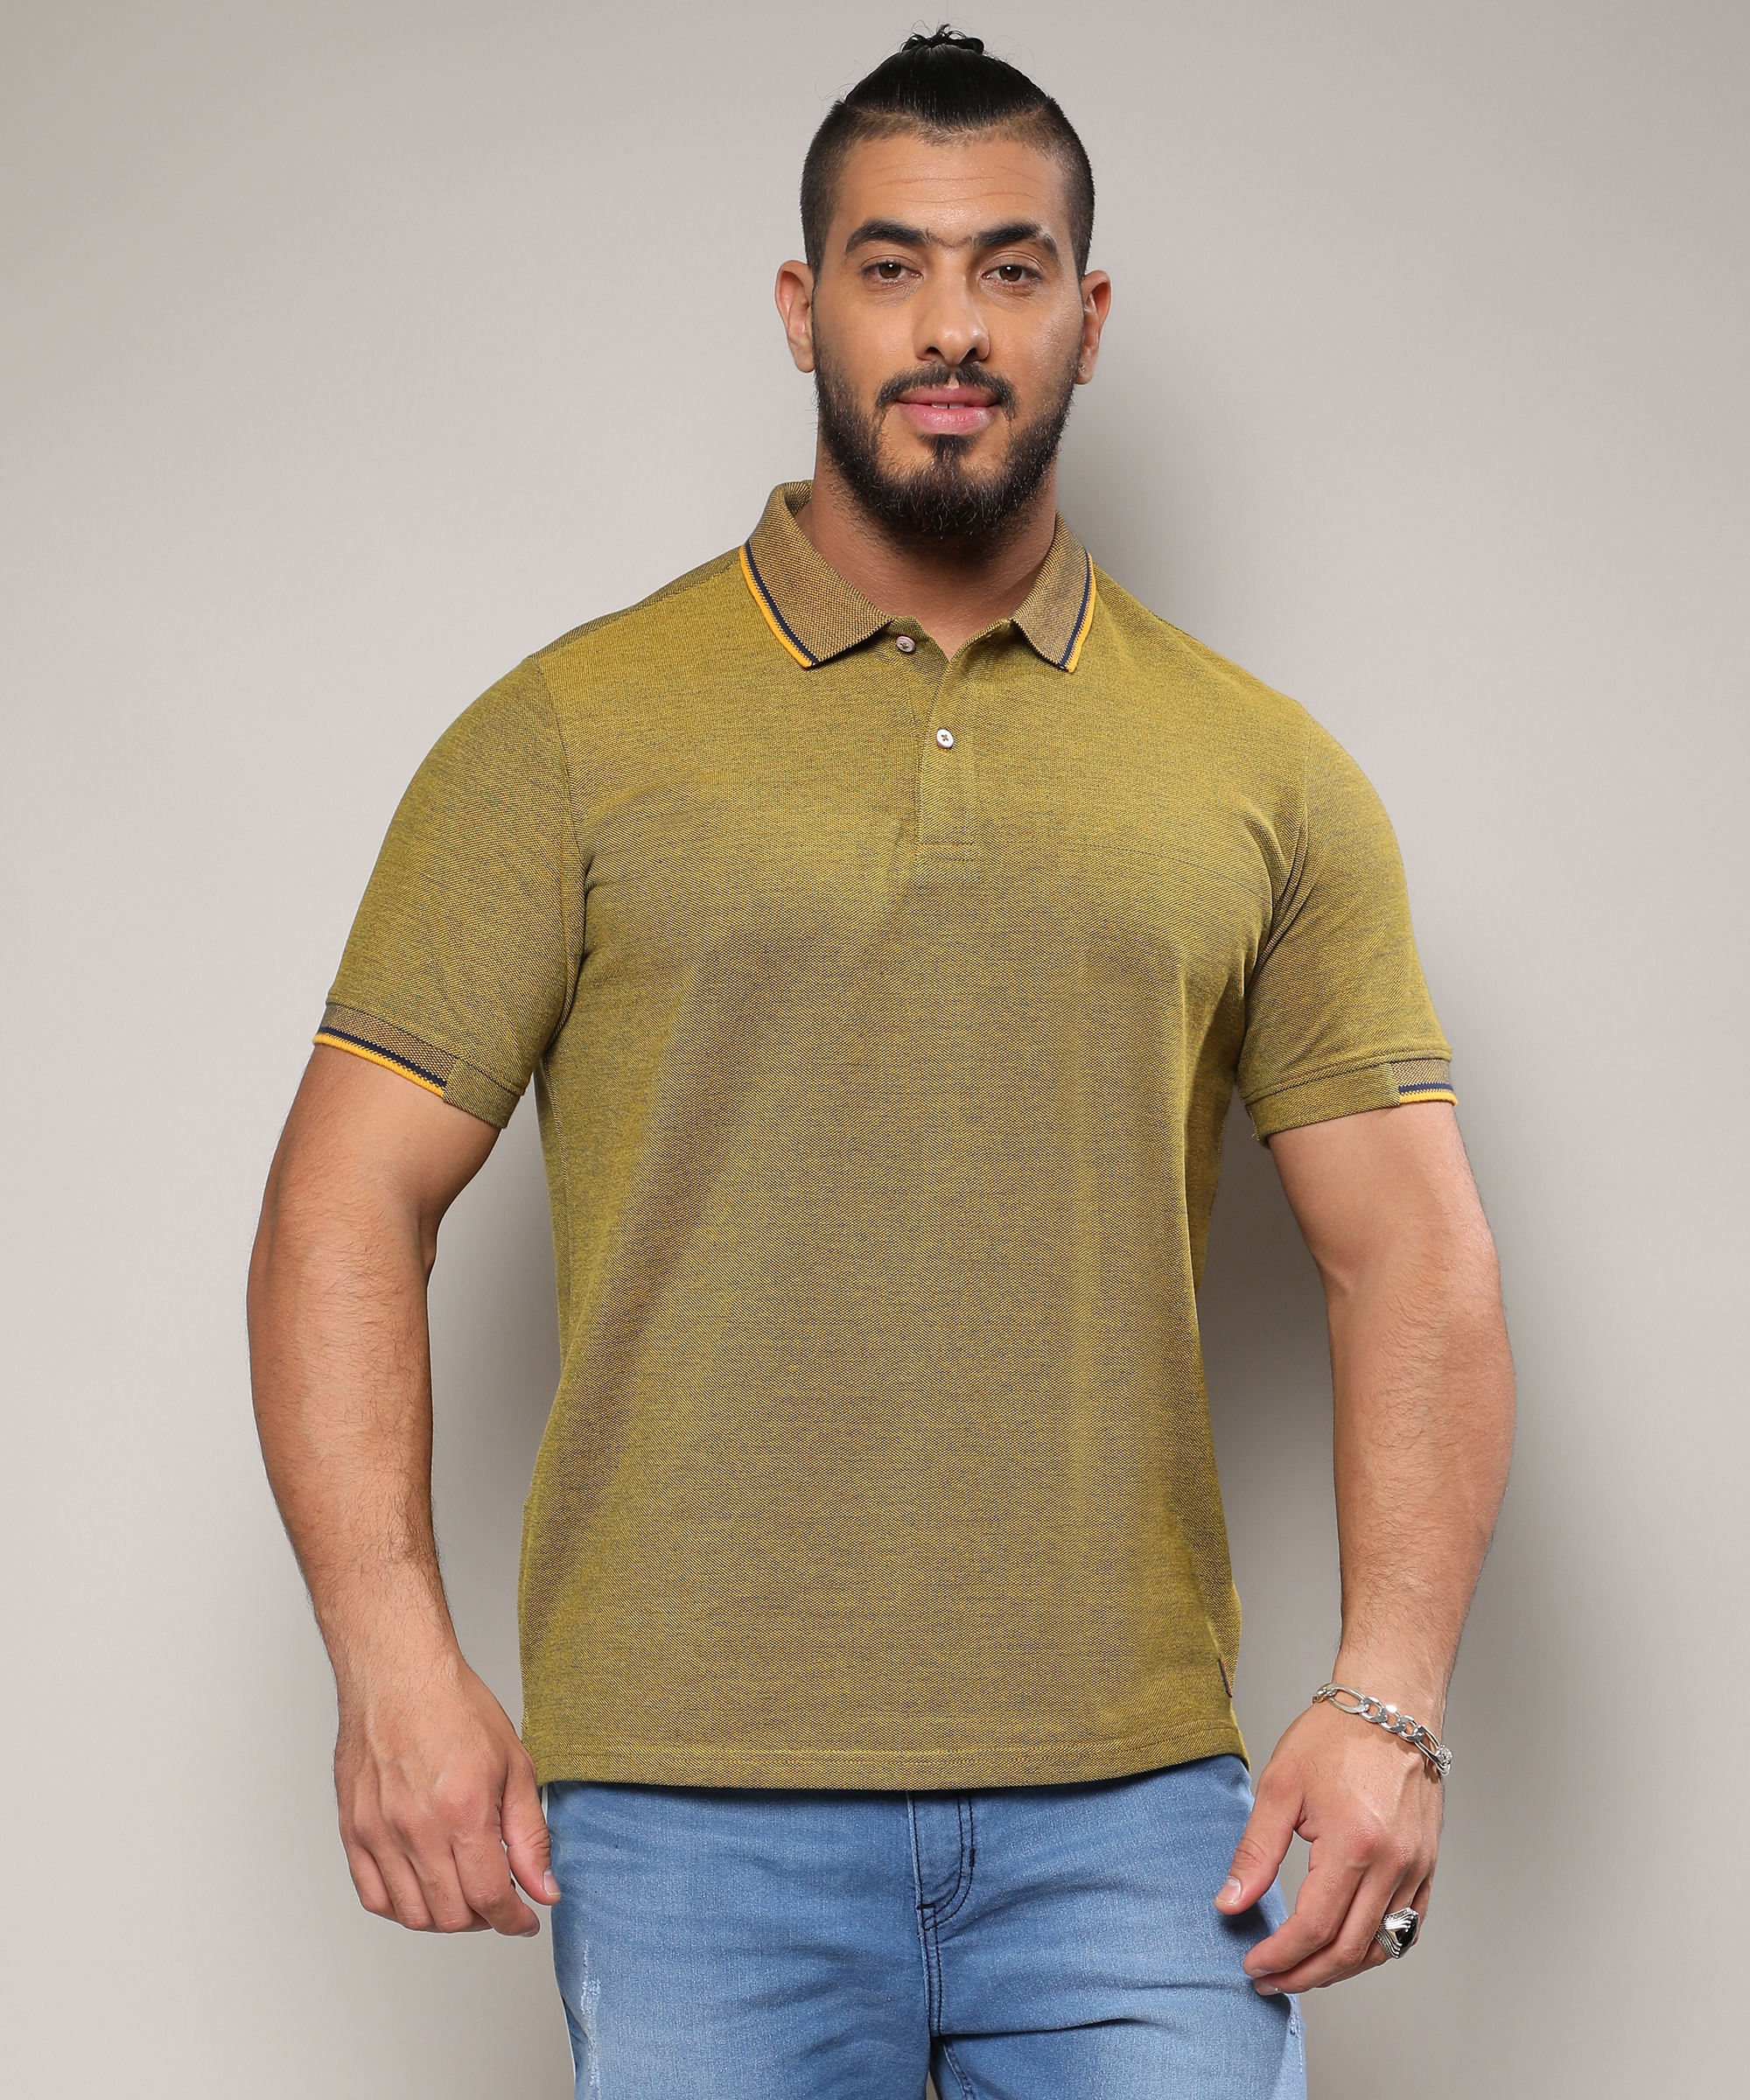 Instafab Plus | Men's Olive Green Basic Polo T-Shirt